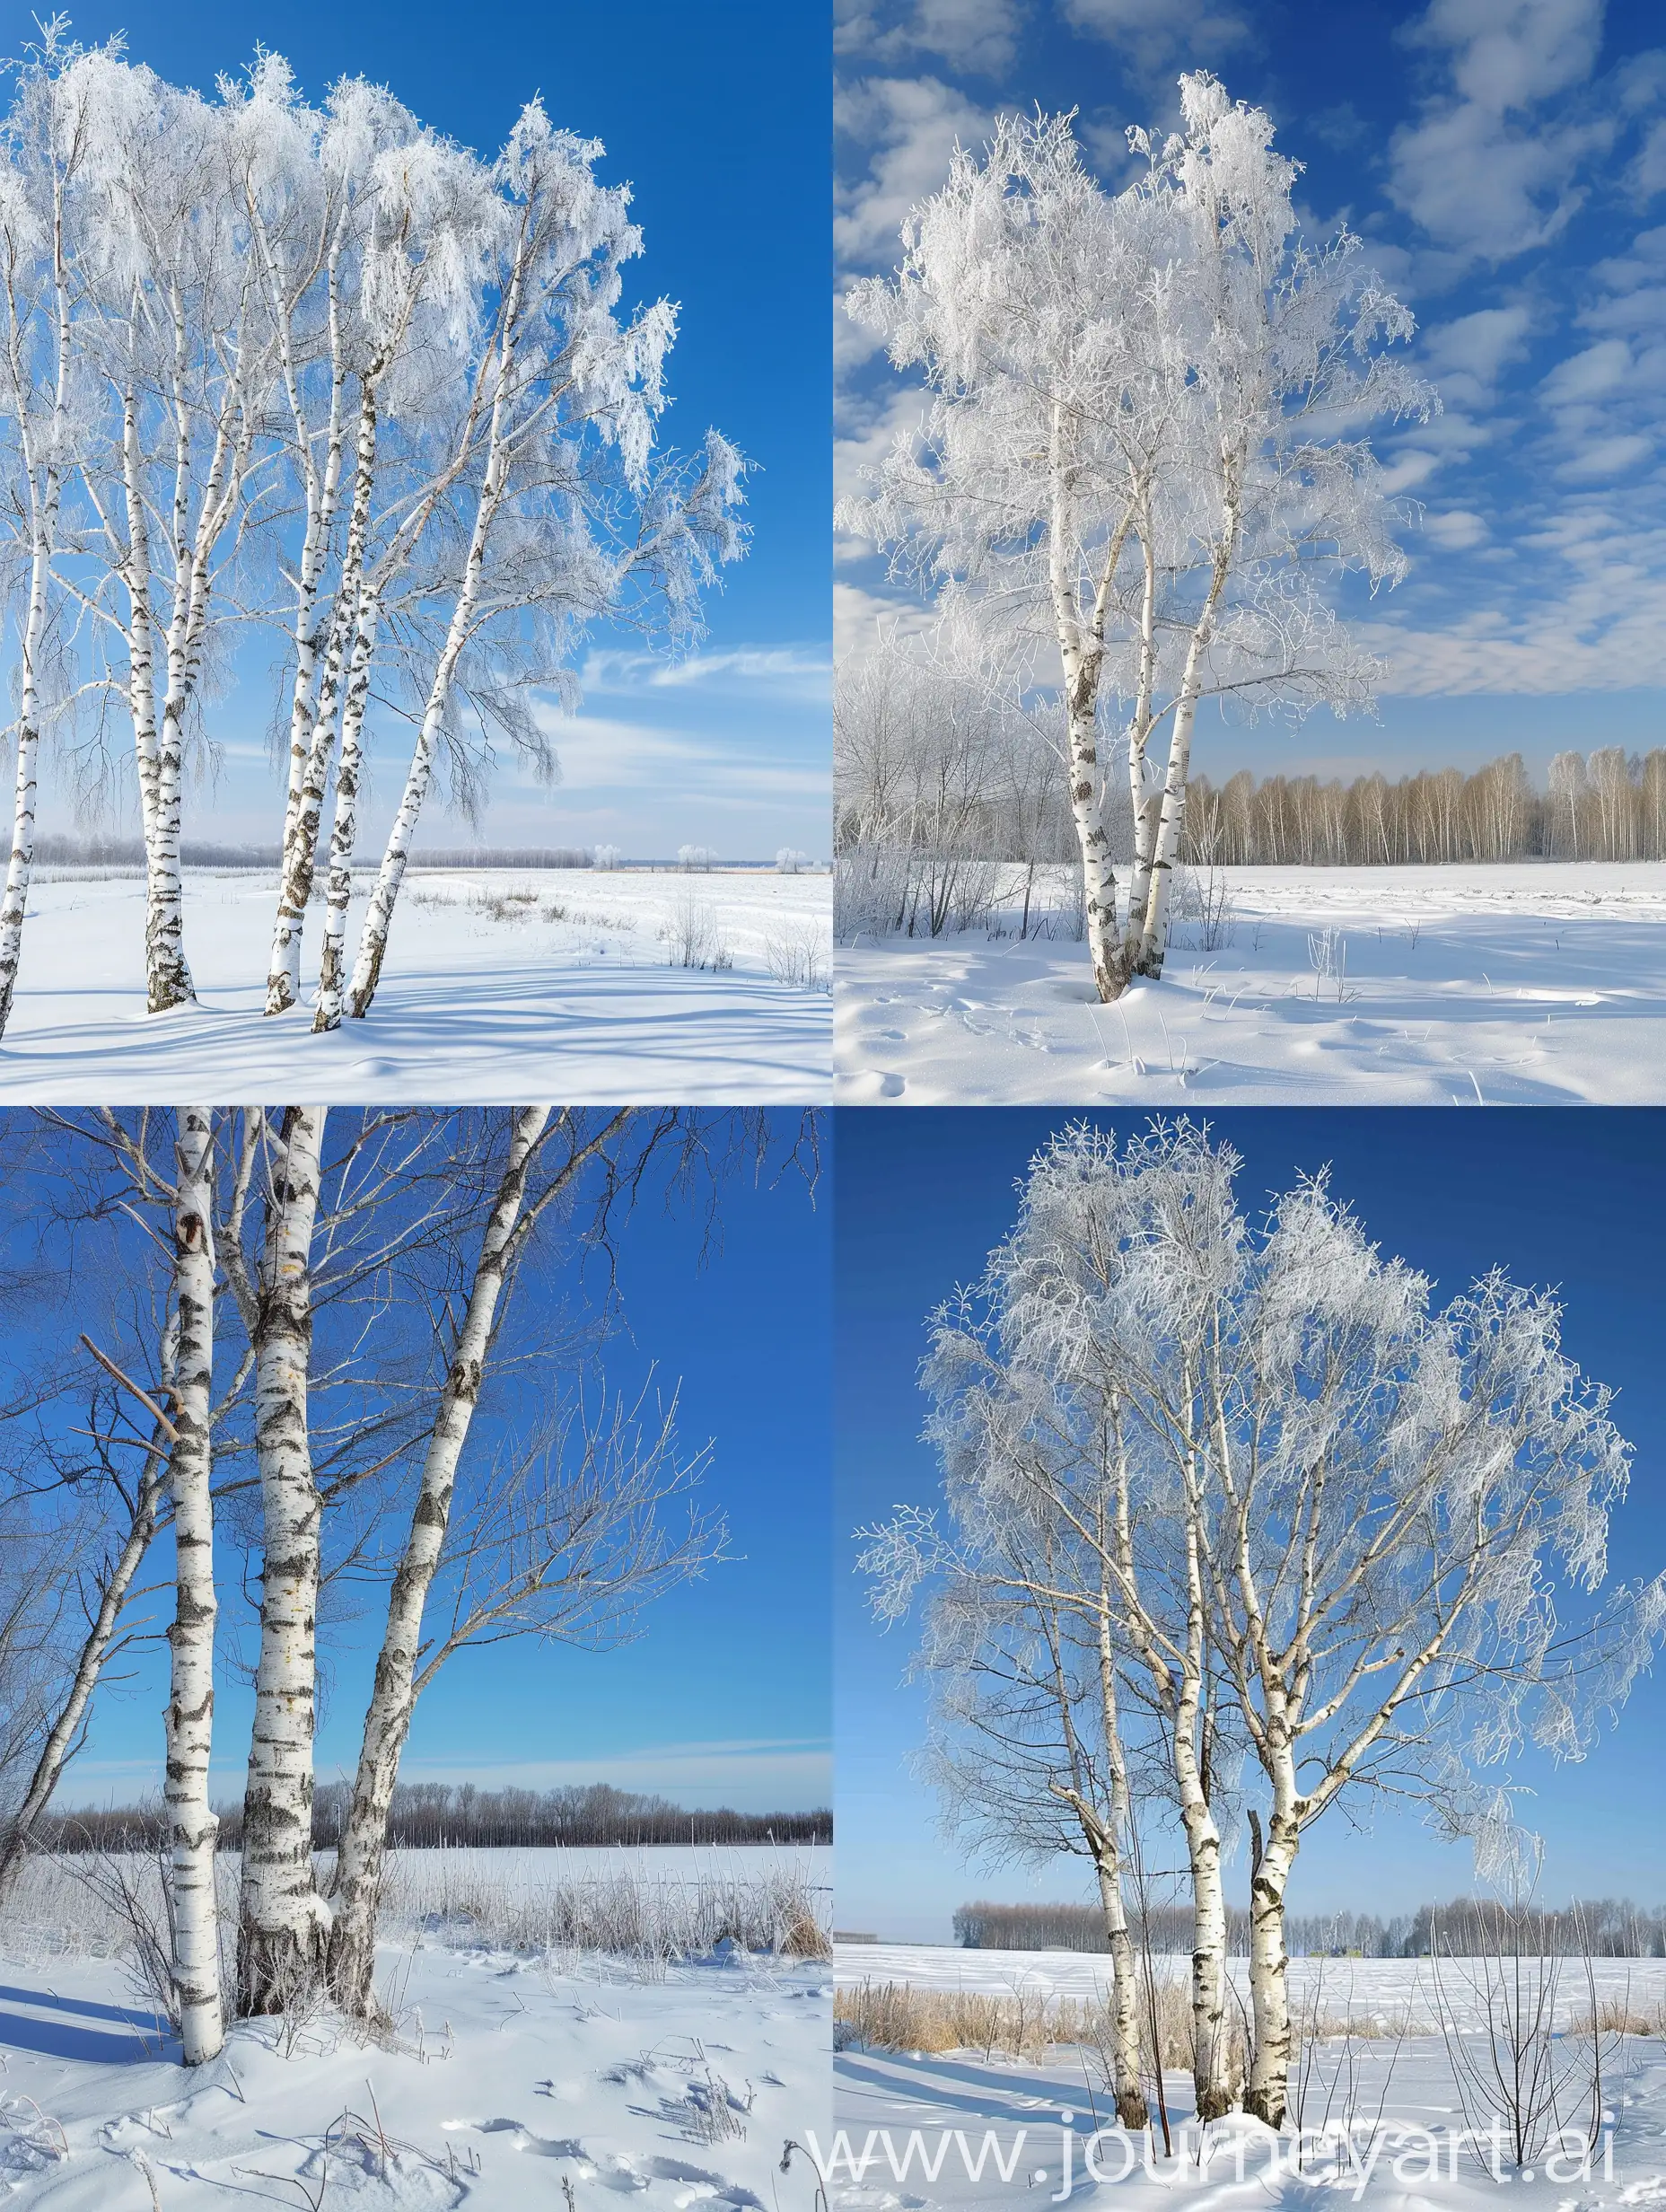 Serene-Winter-Landscape-SnowCovered-Birch-Forest-under-a-Crisp-Blue-Sky